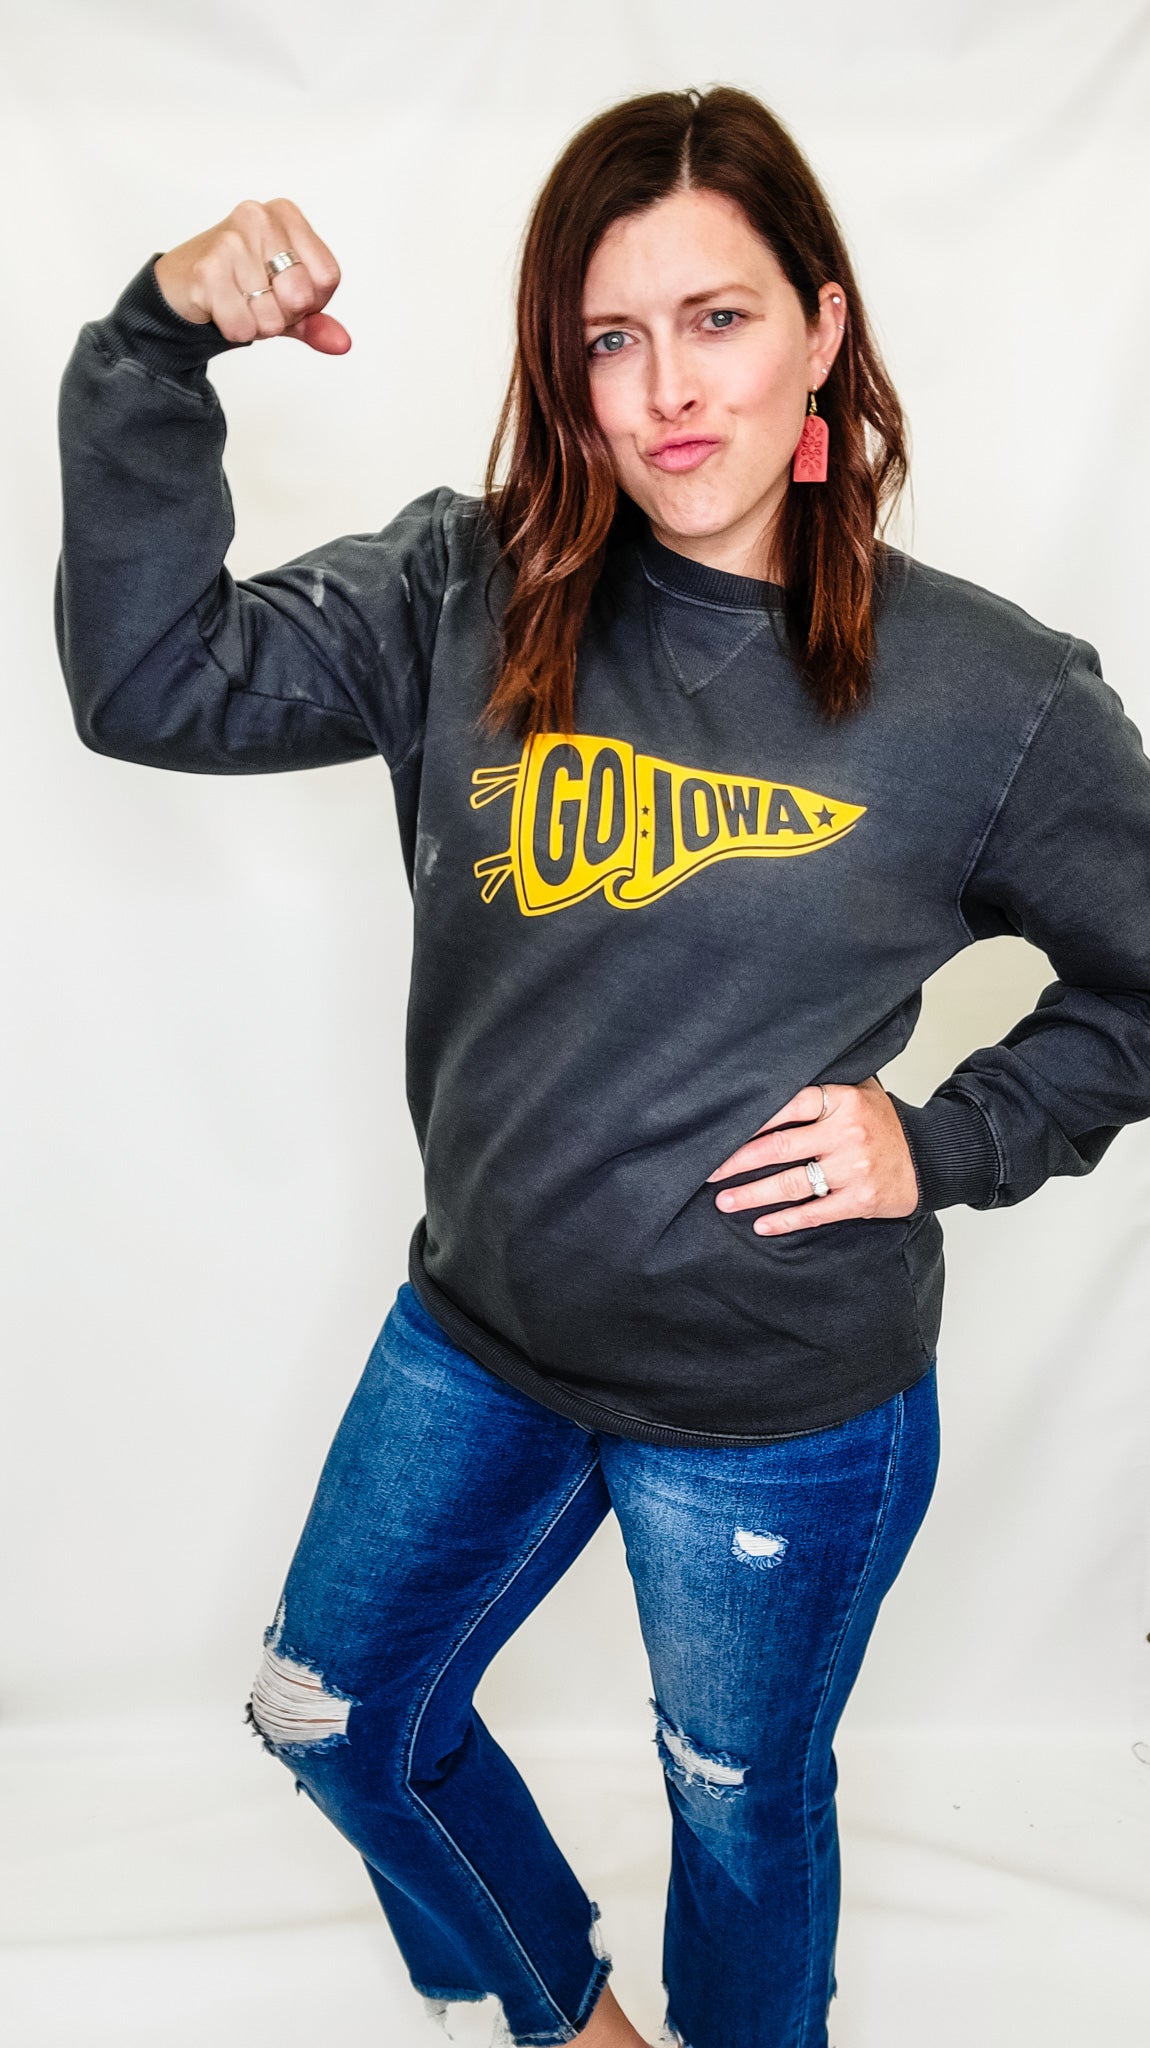 Go Iowa or Iowa State Crew Neck Sweatshirts